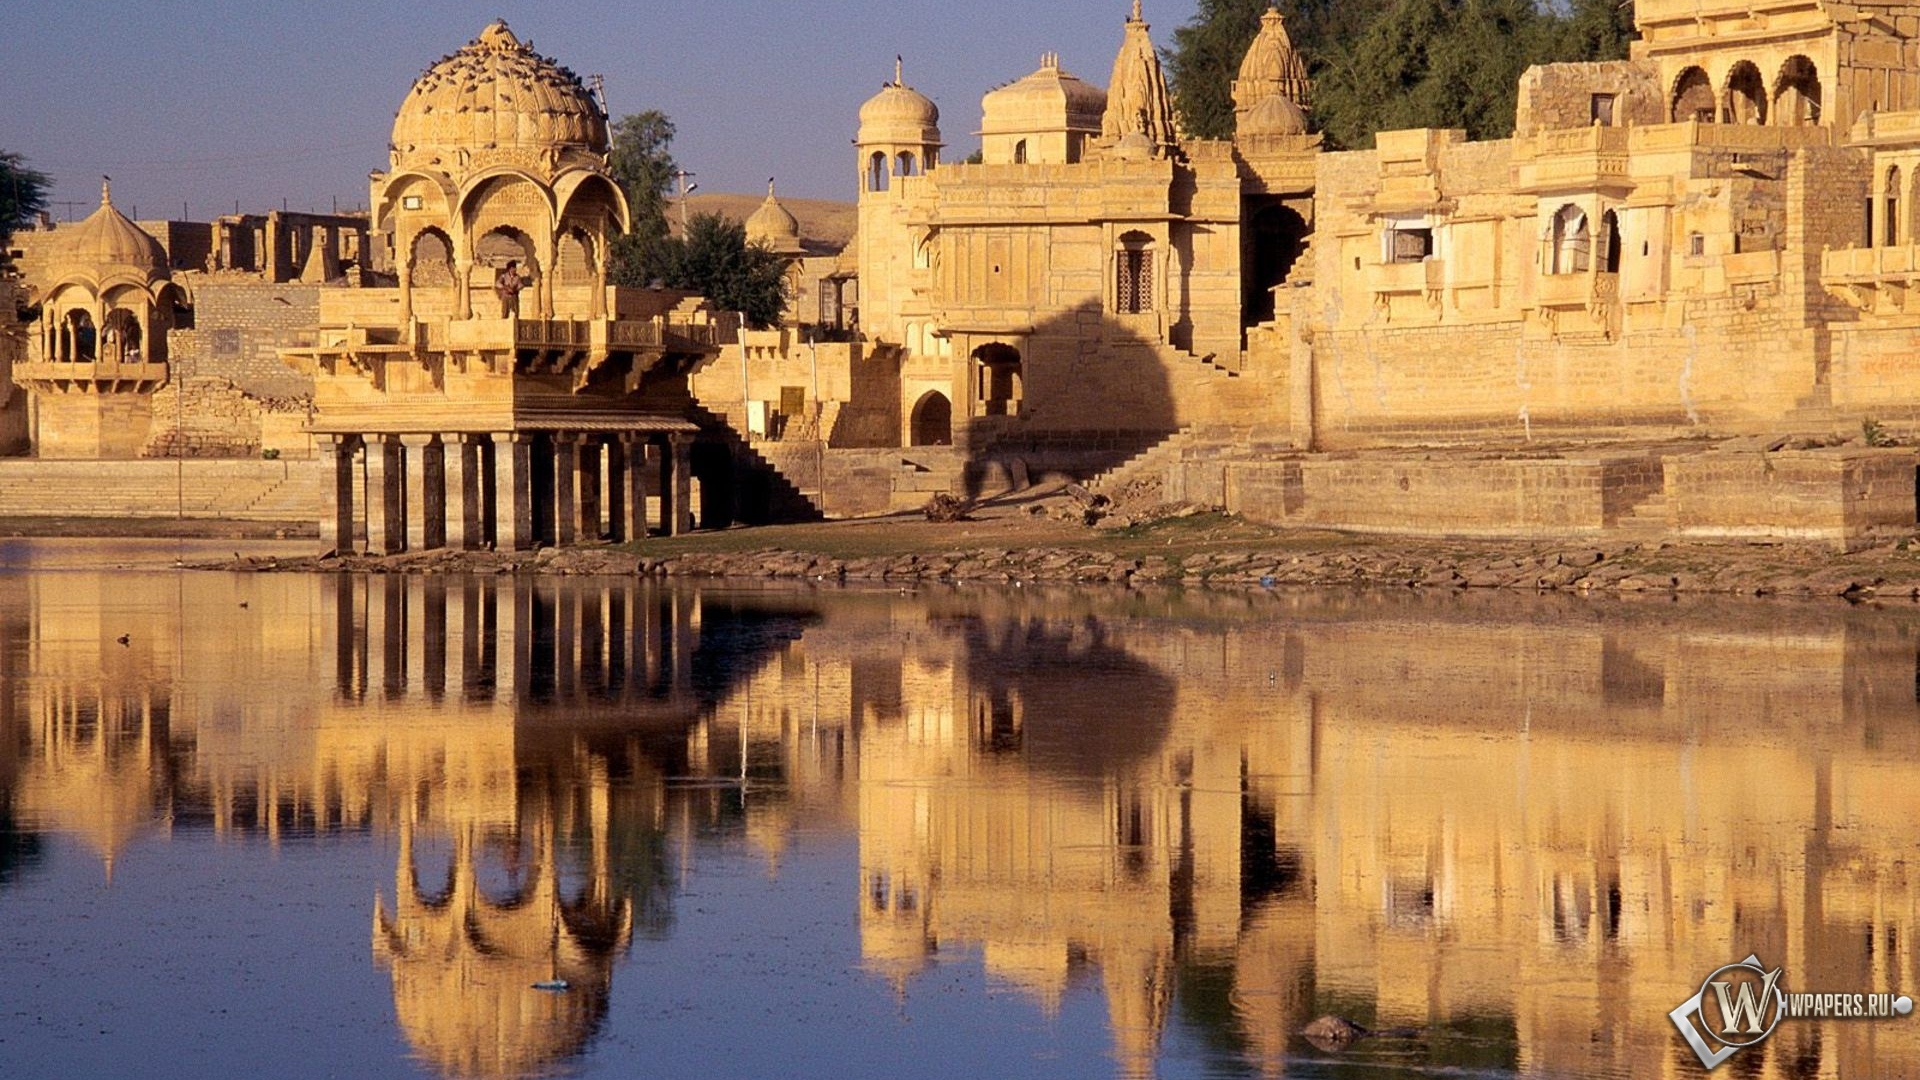 Jaisalmer - Rajasthan - India  1920x1080